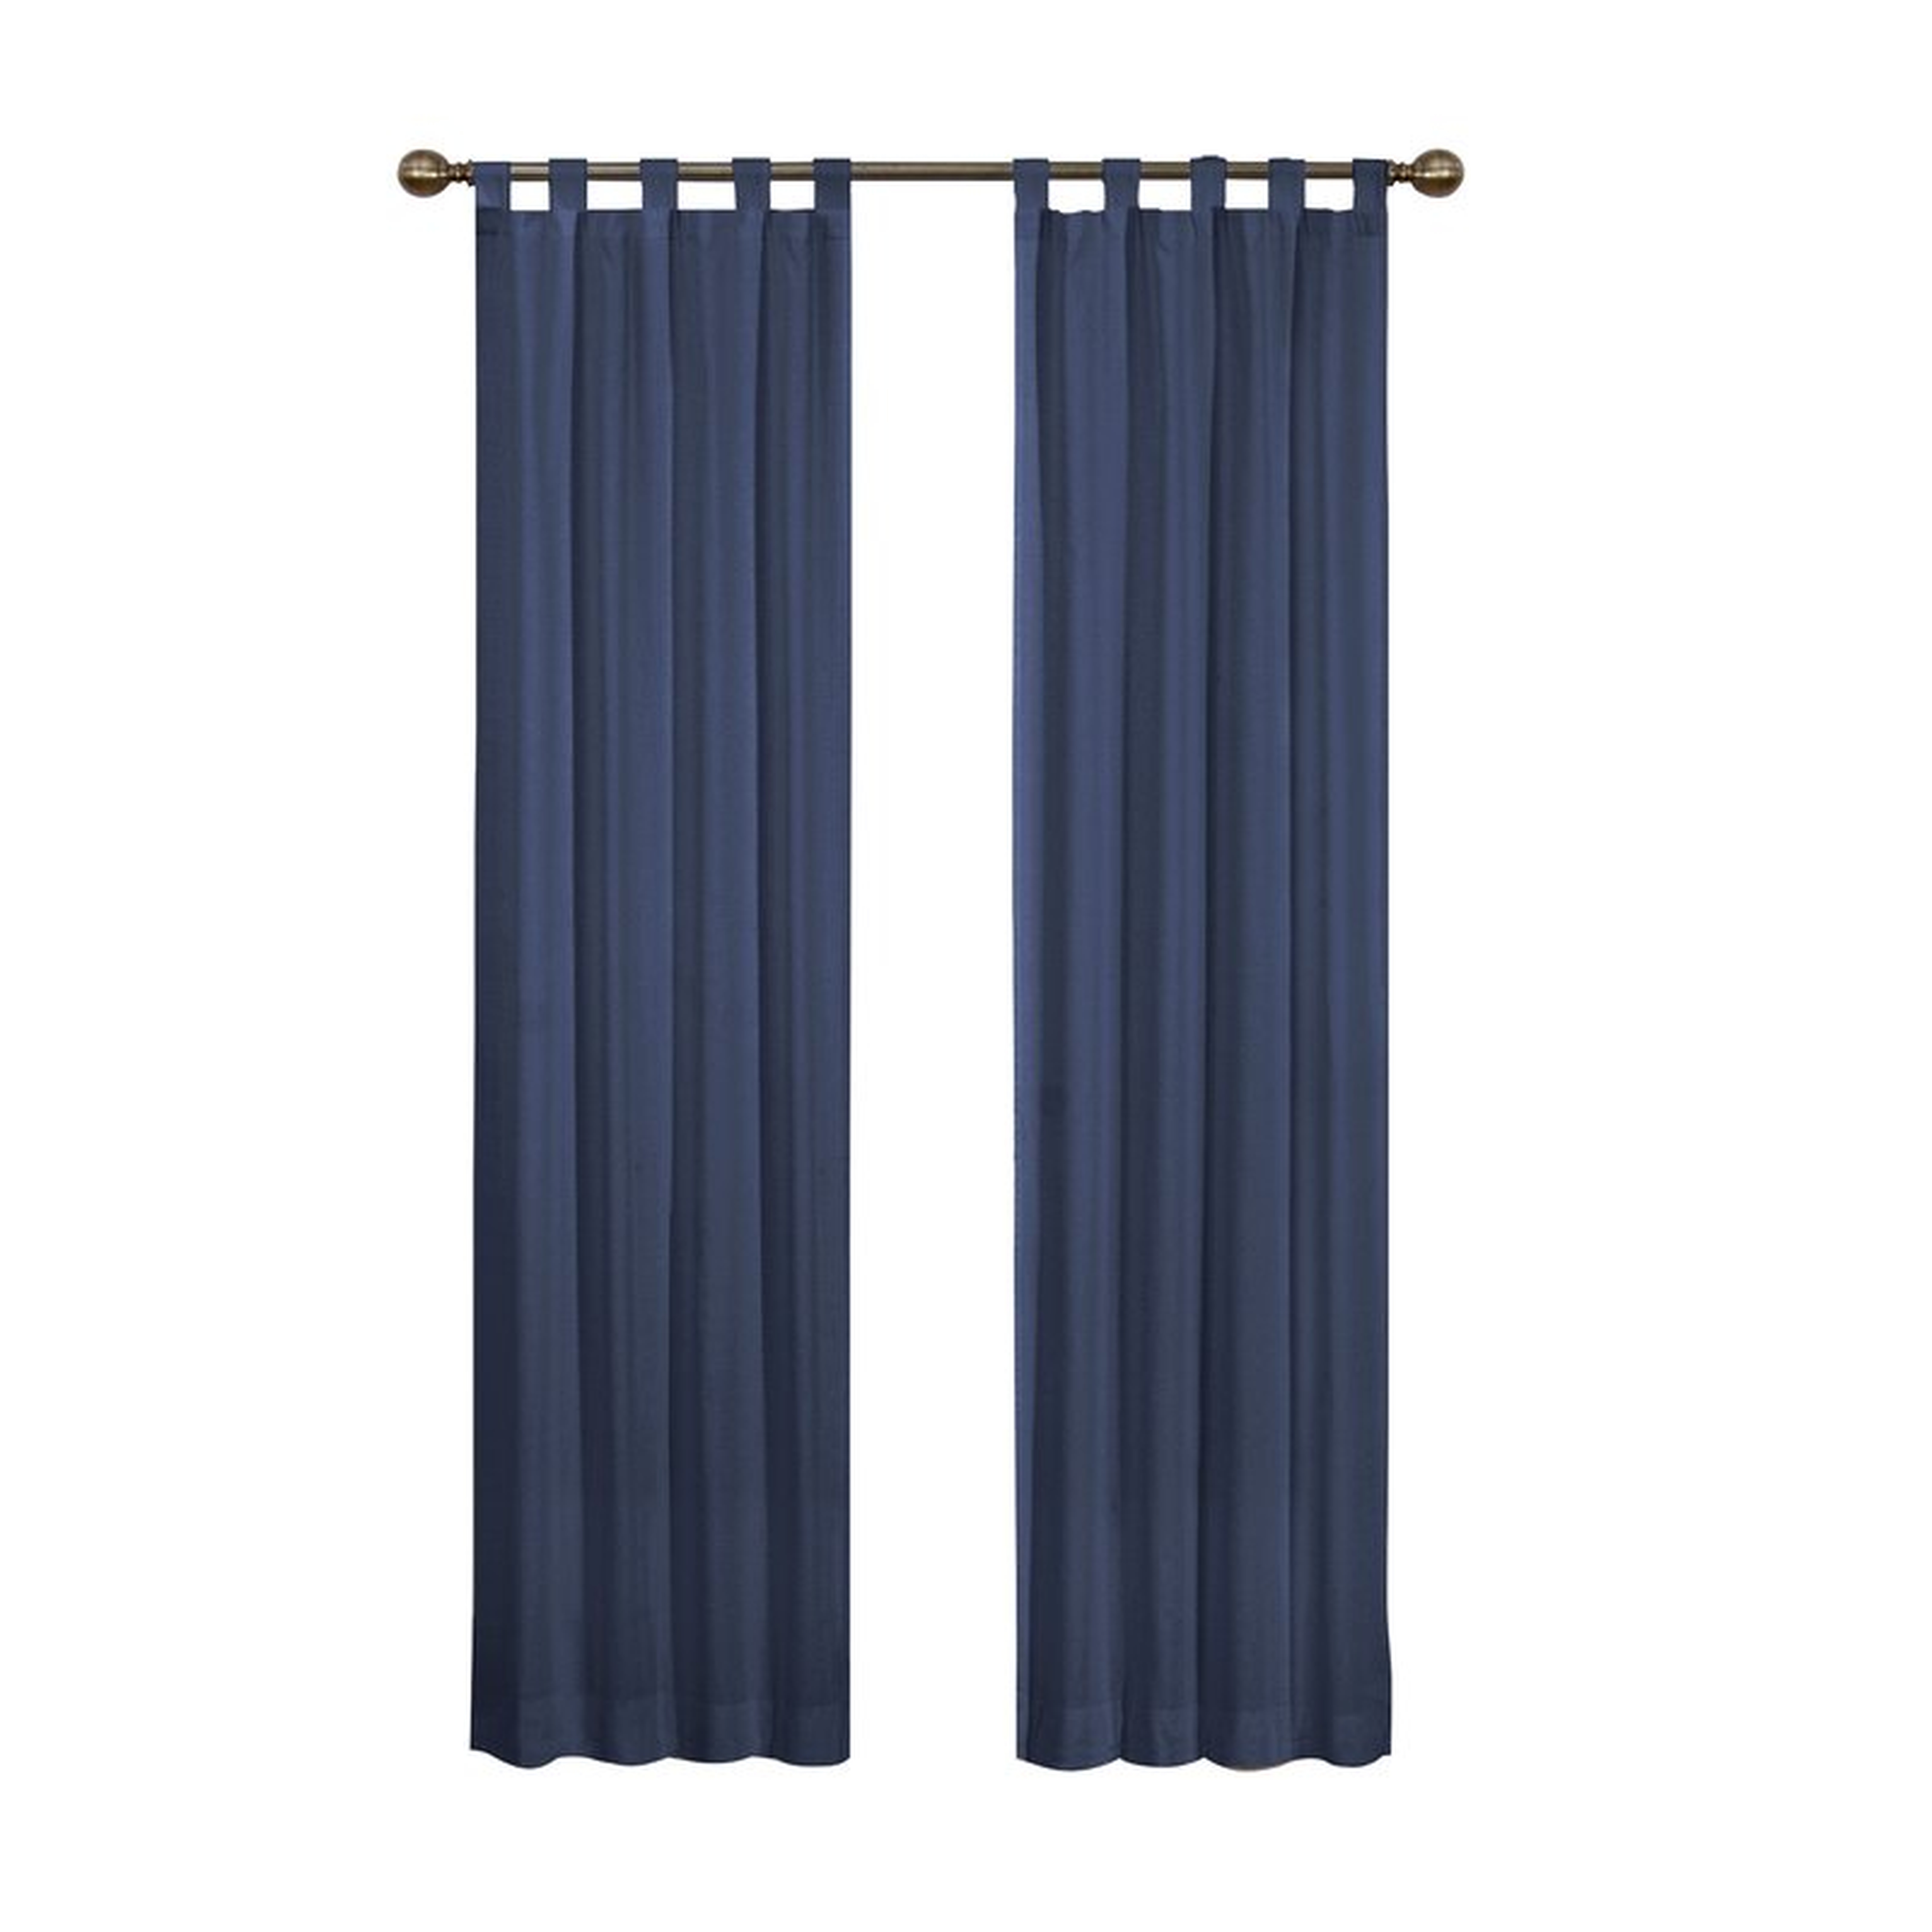 Barretti Cotton Blend Solid Sheer Tab Top Curtain Panels (set of 2) - Wayfair